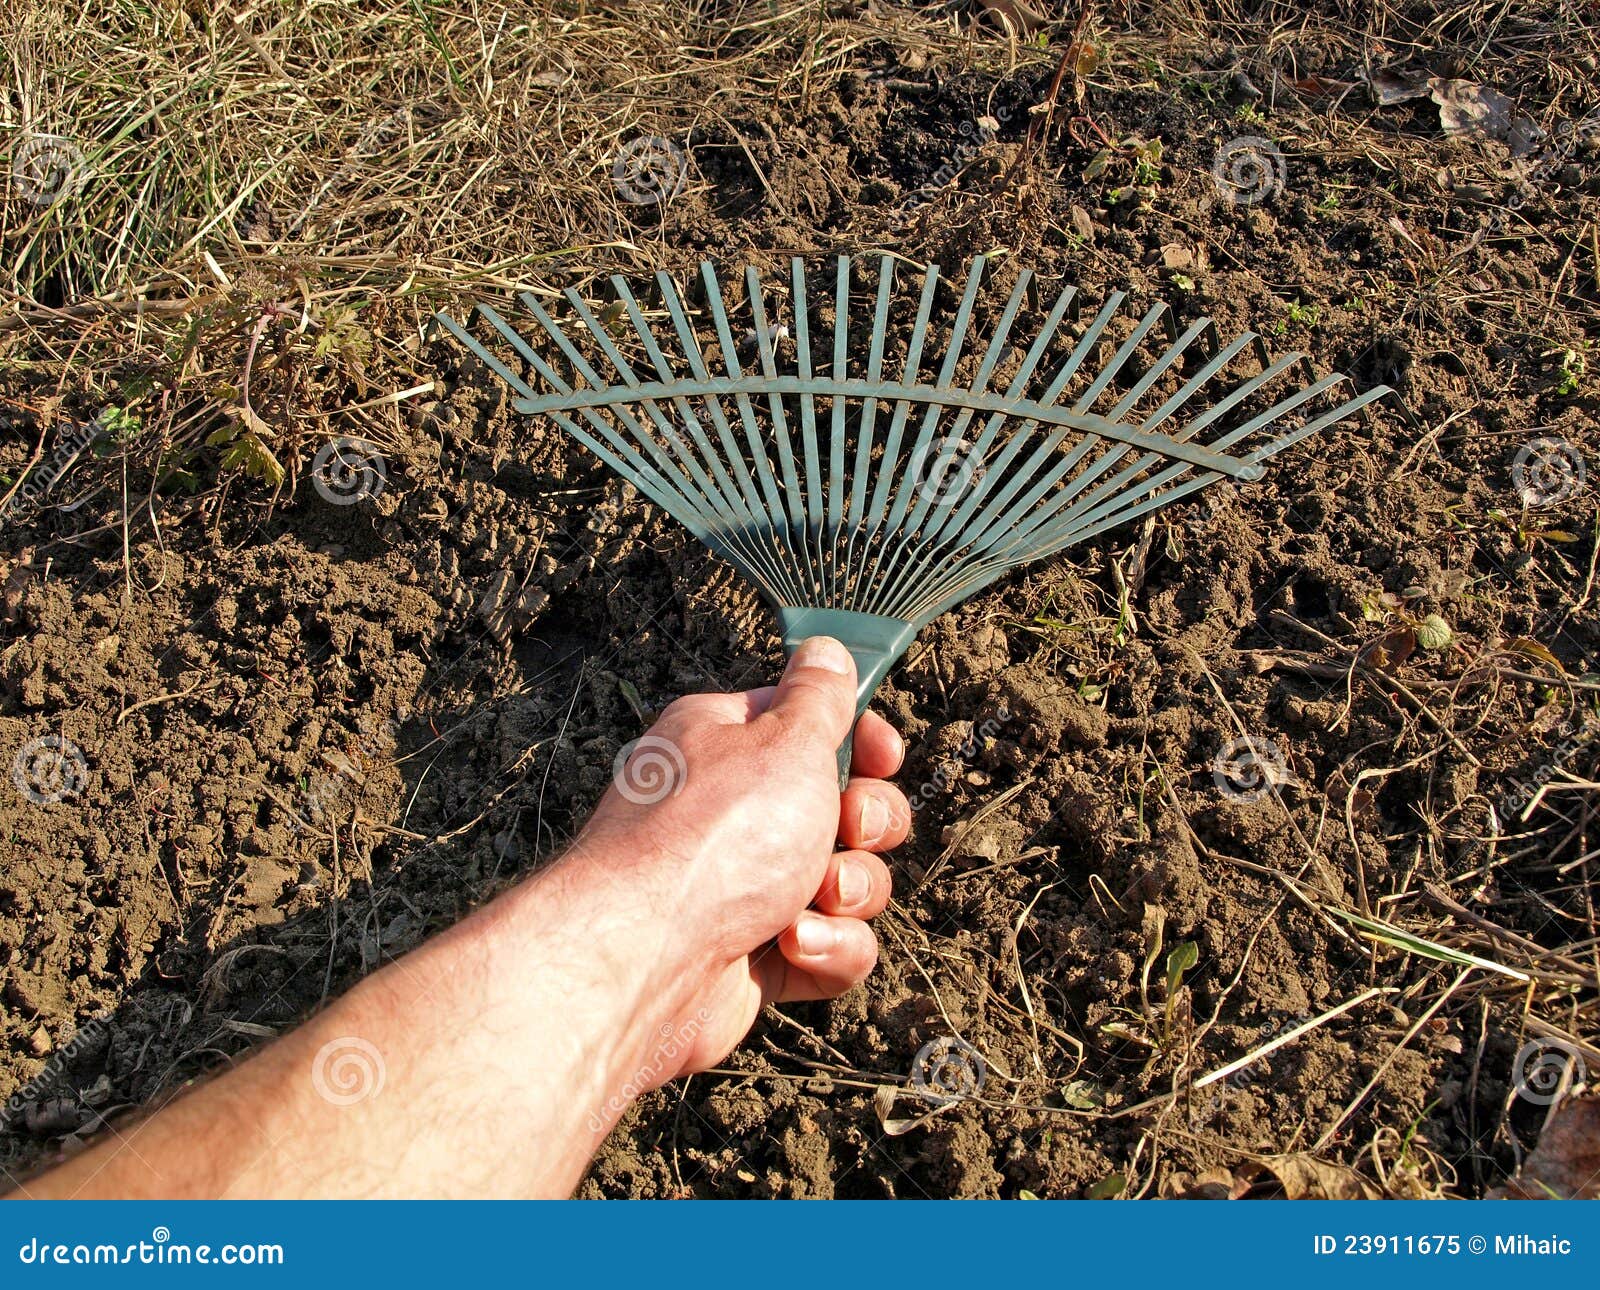 Garden rake in action stock image. Image of hand, spring - 23911675